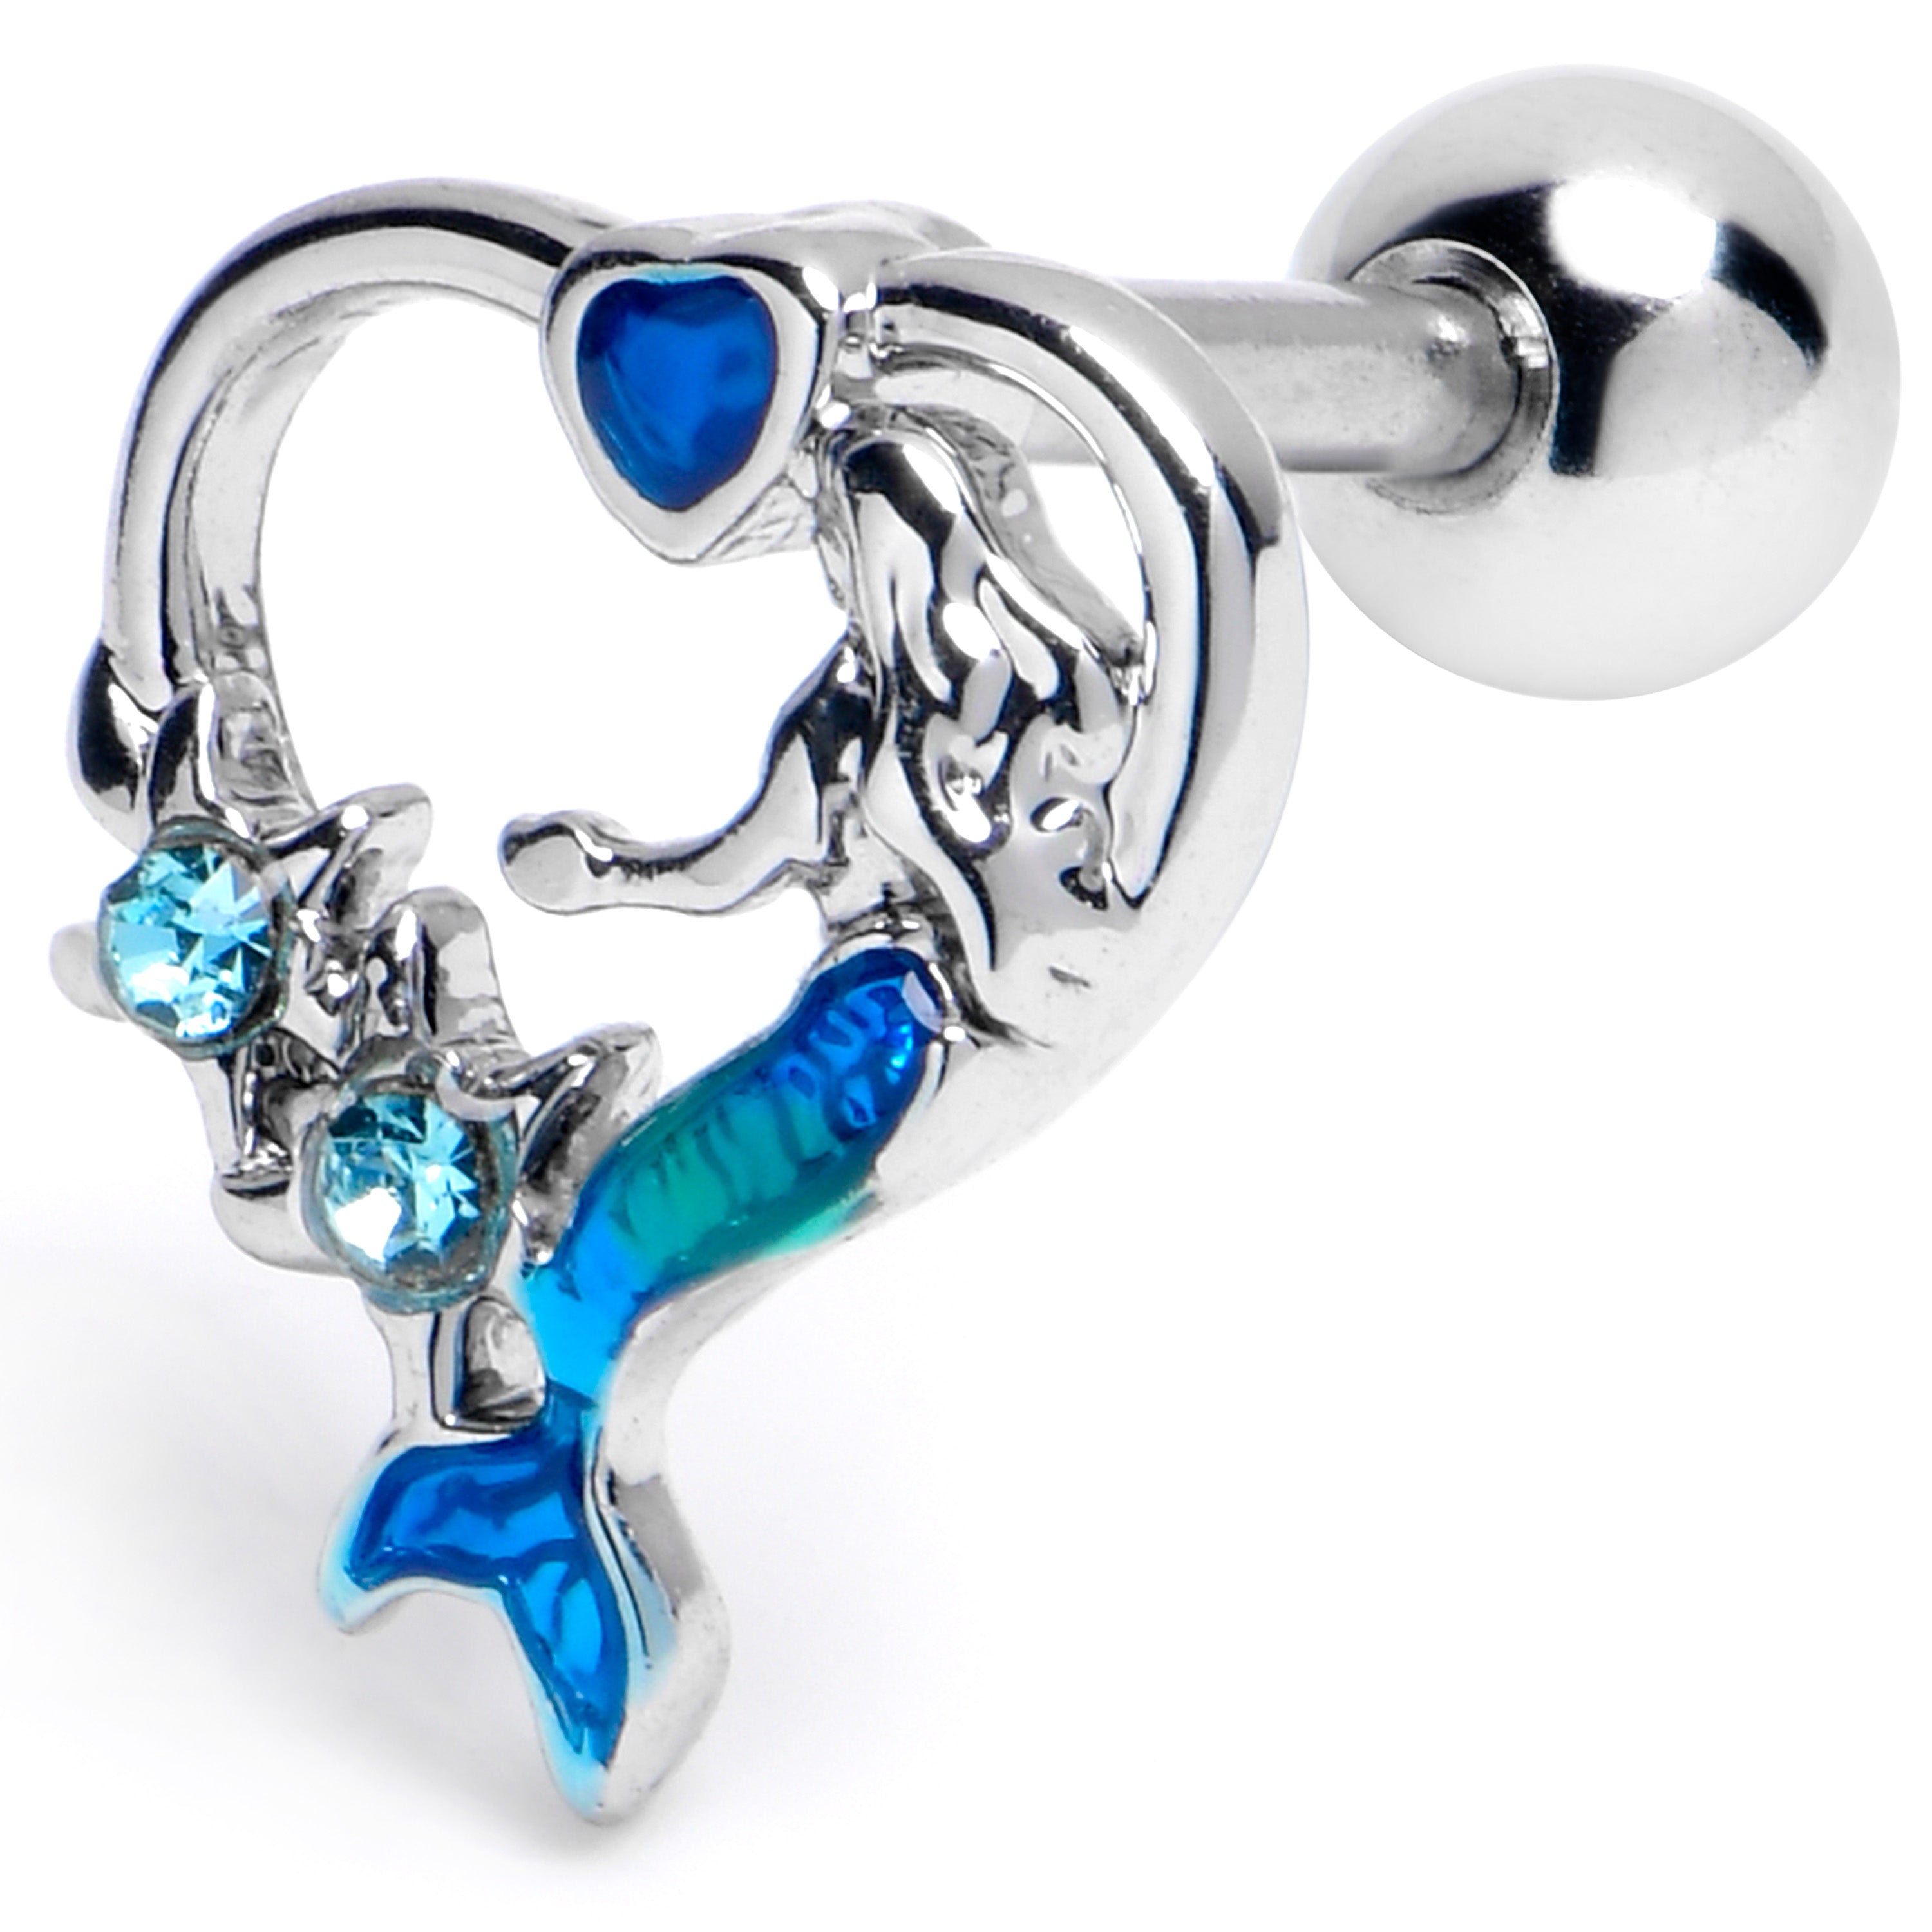 16 Gauge 1/4 Blue Gem Mermaid Stars Heart Cartilage Tragus Earring